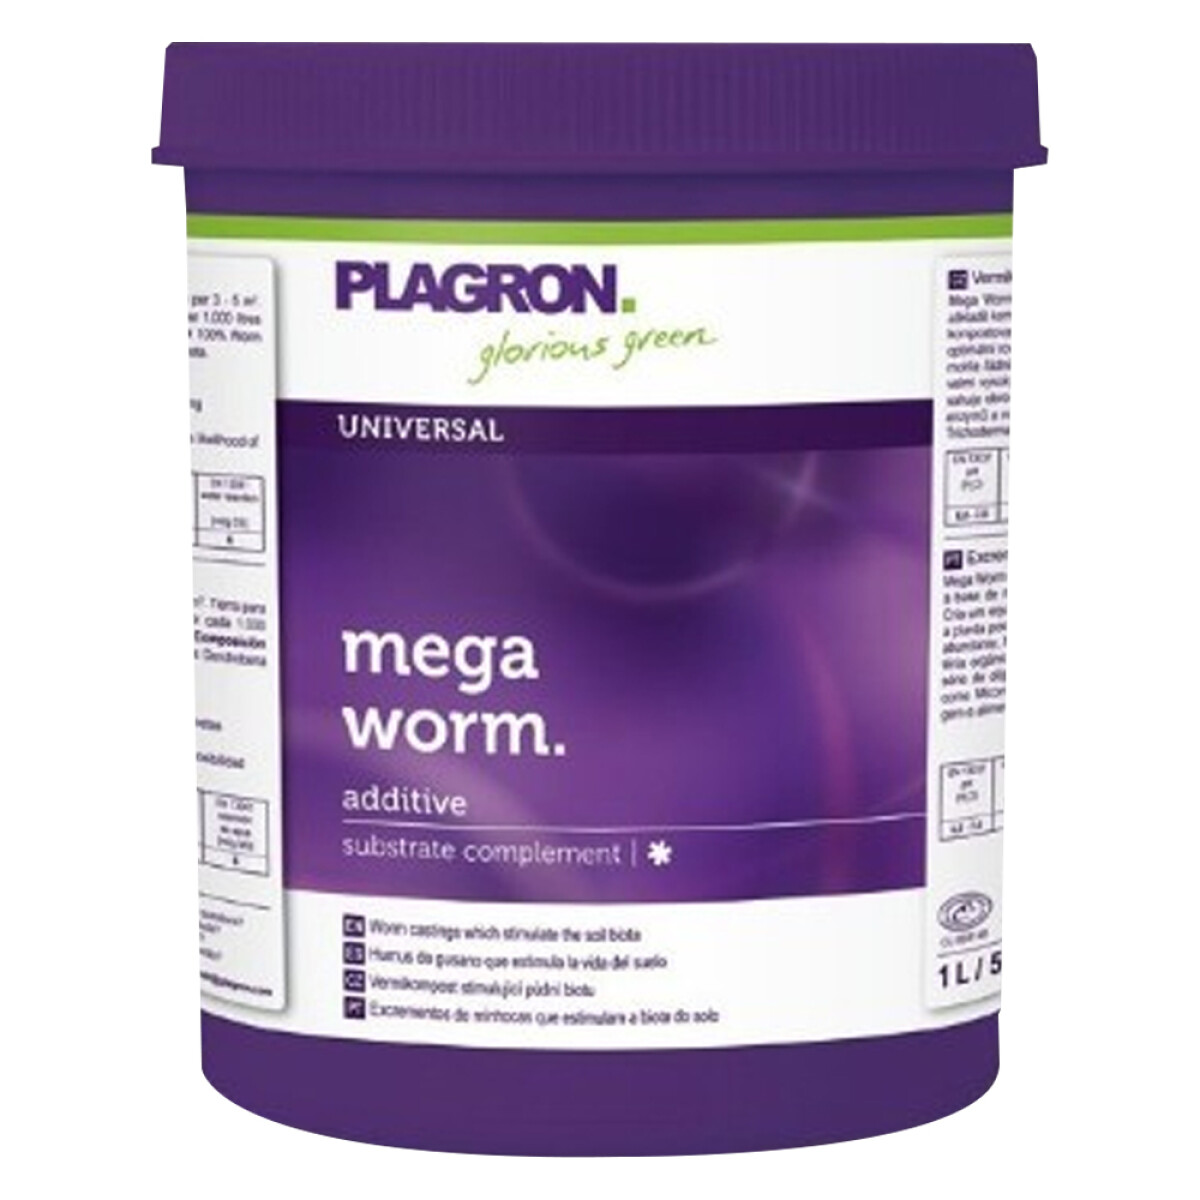 MEGA WORM PLAGRON - 5L 